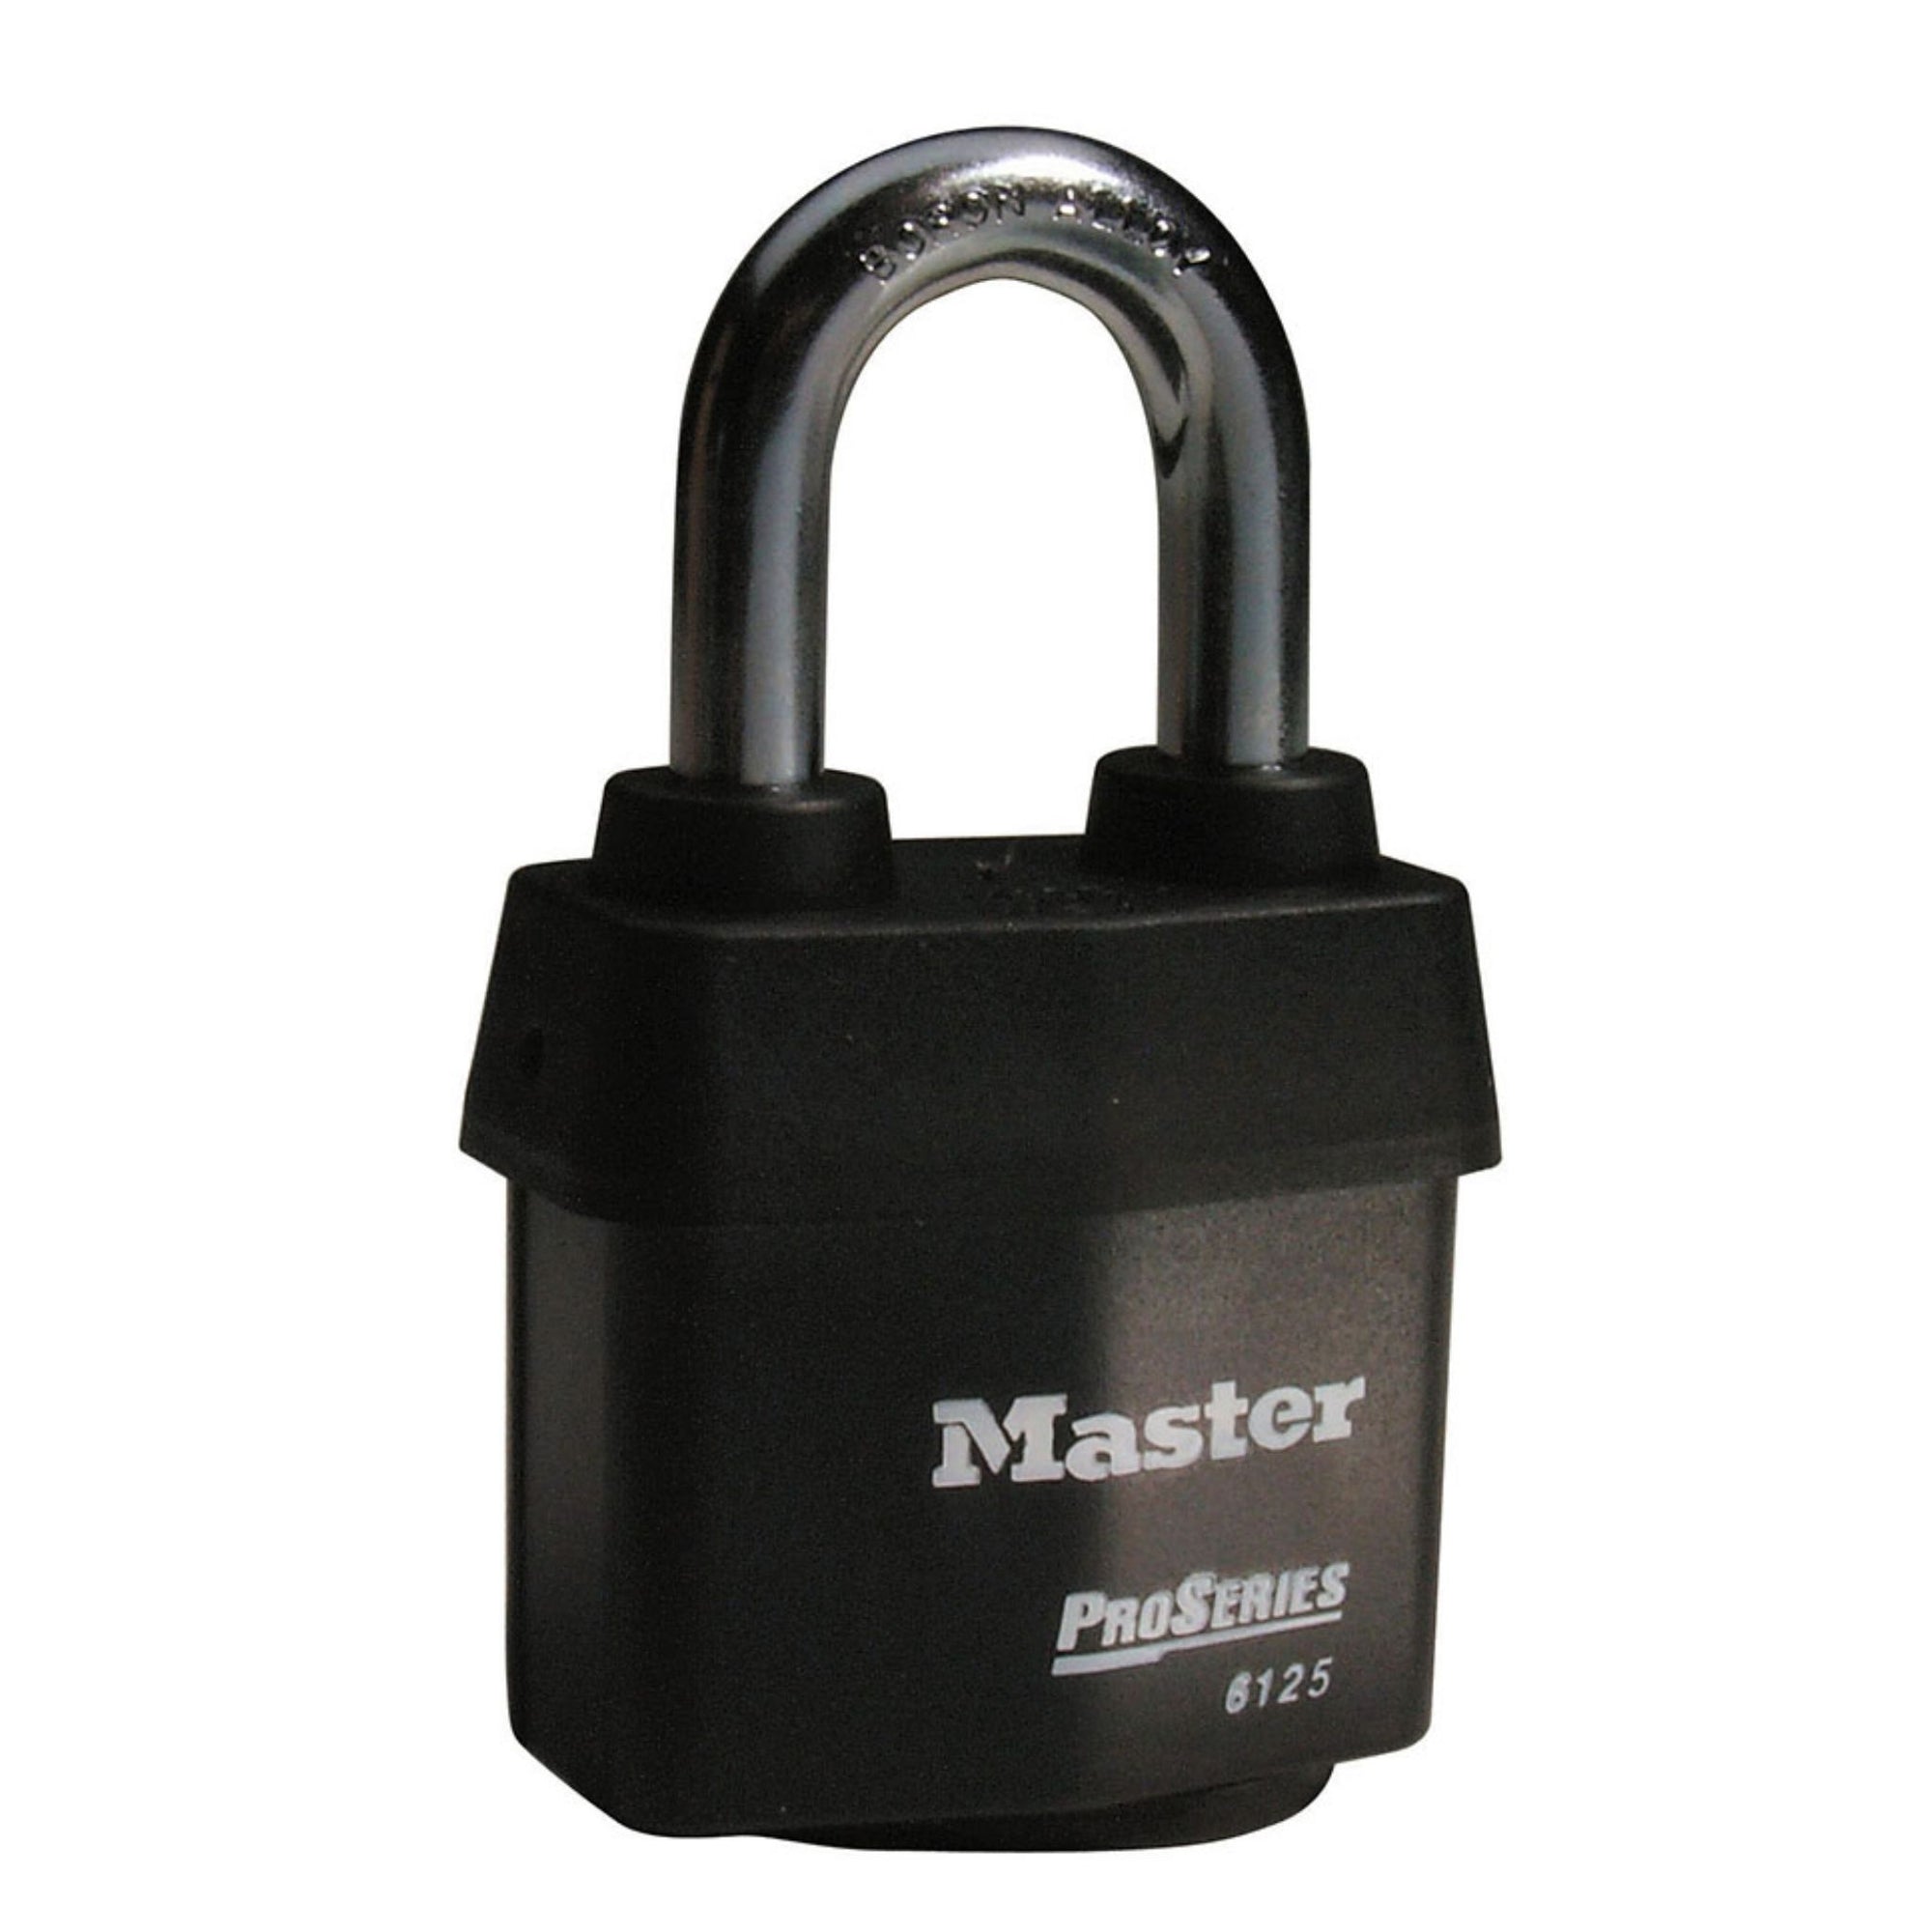 Master Lock No. 6125 Locks Pro Series Padlocks - The Lock Source